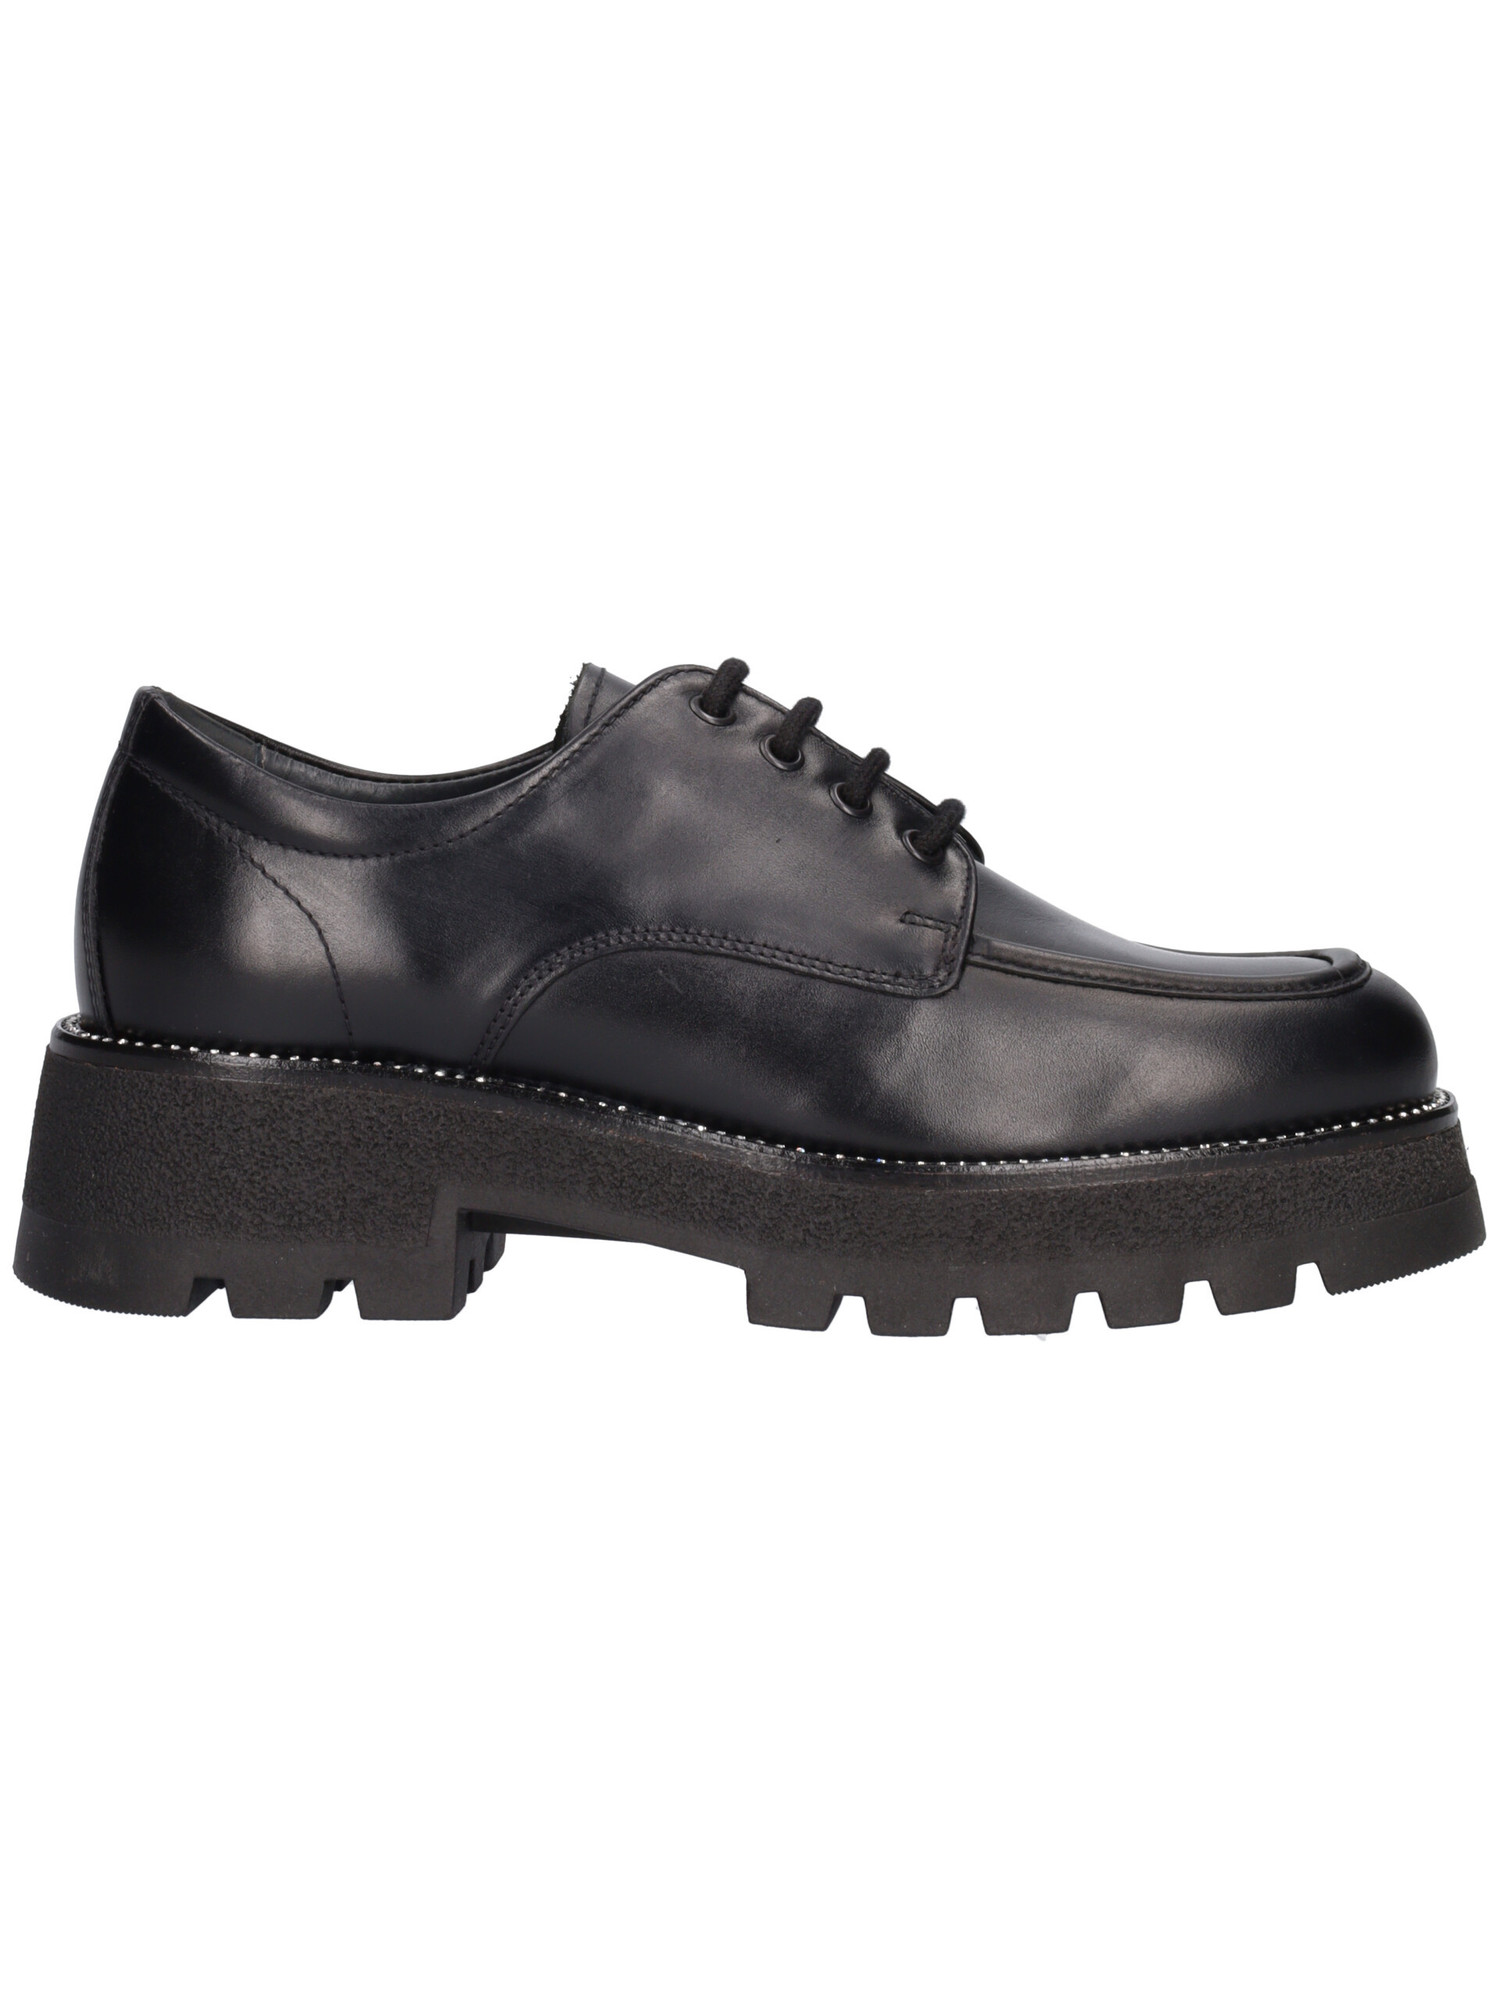 scarpa-stringata-nero-giardini-da-donna-nera-617855